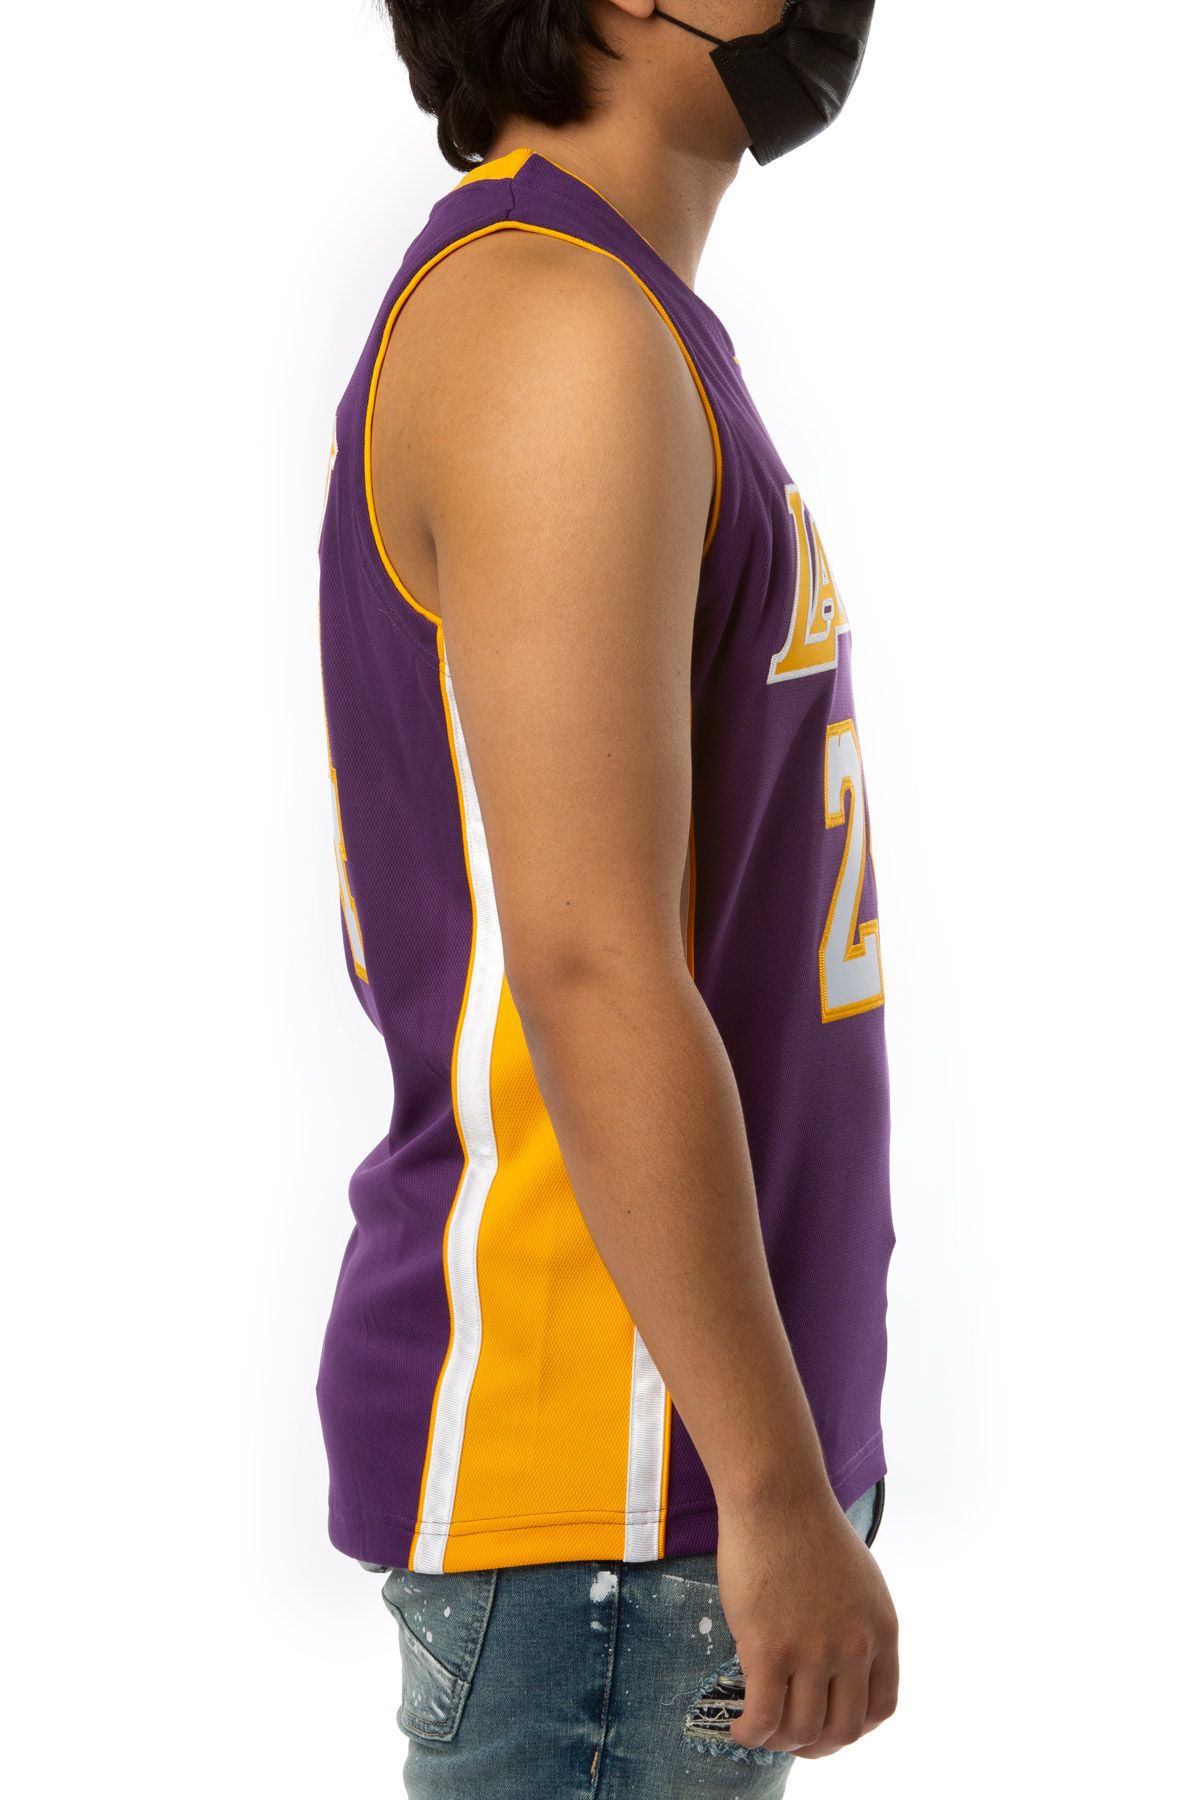 NBA Kobe Bryant Authentic Jersey 2006-07 Los Angeles Lakers Basketball  Jersey • Kybershop